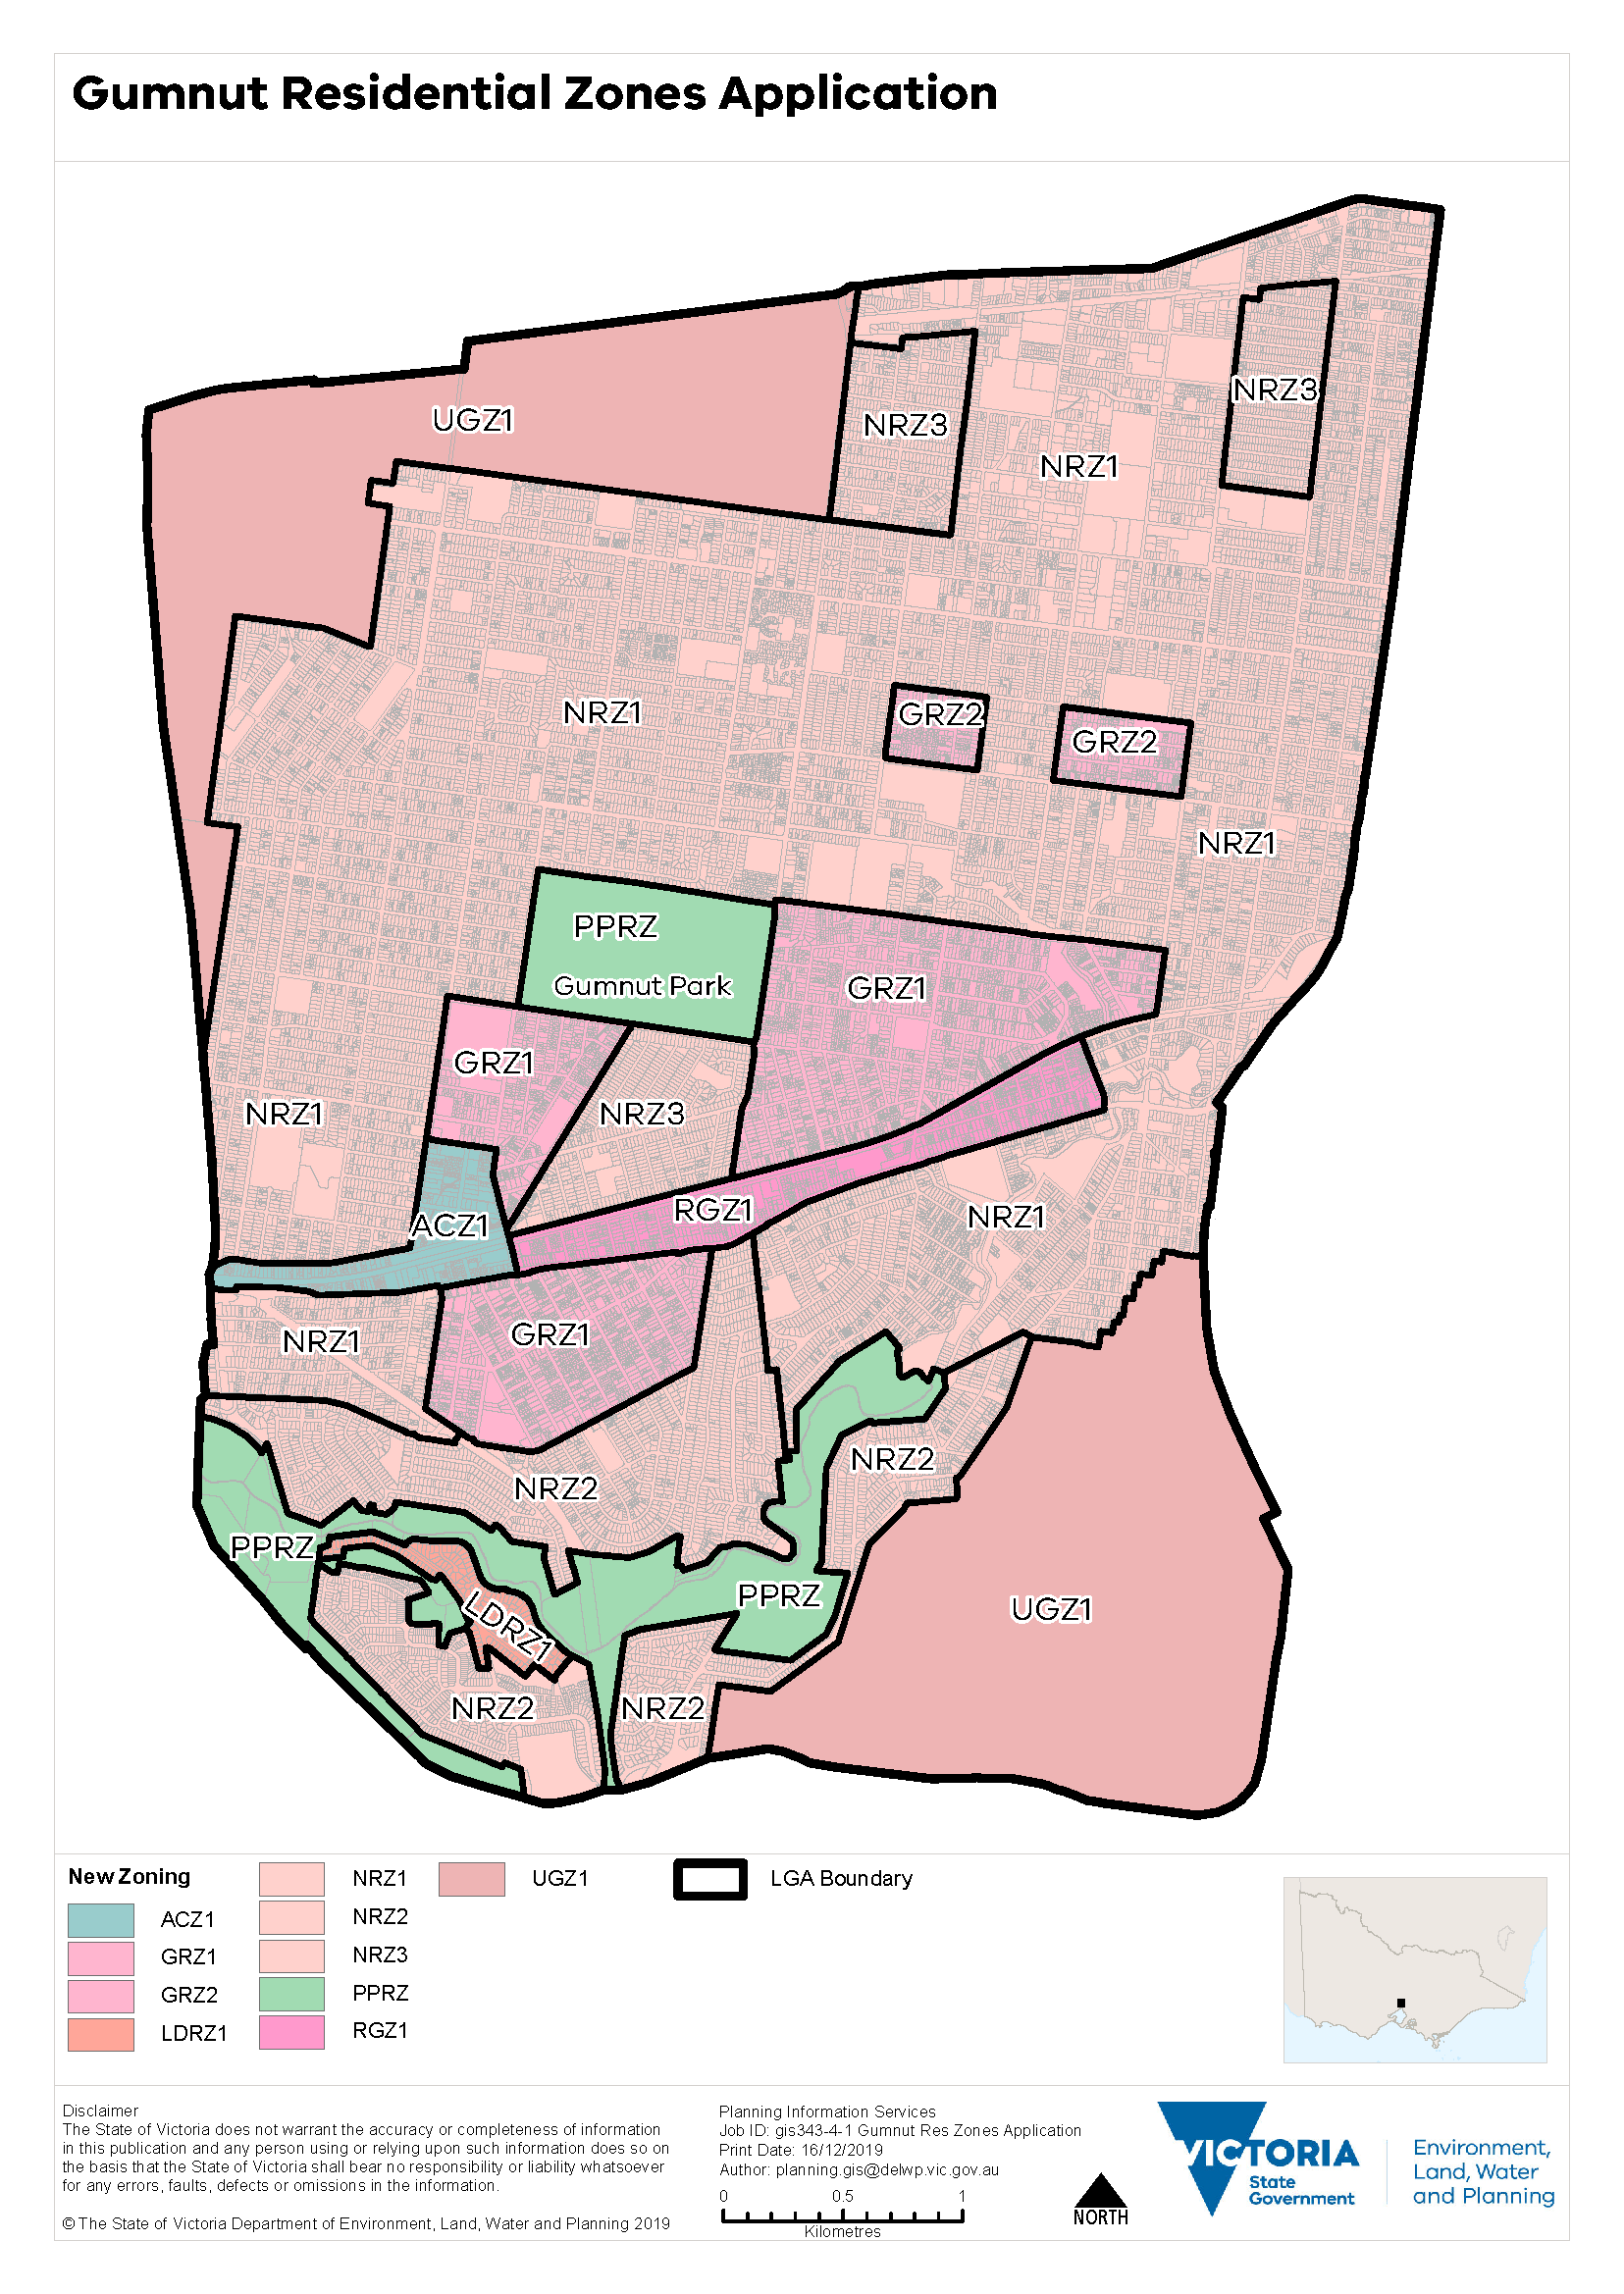 Figure 3: Gumnut residential zones application